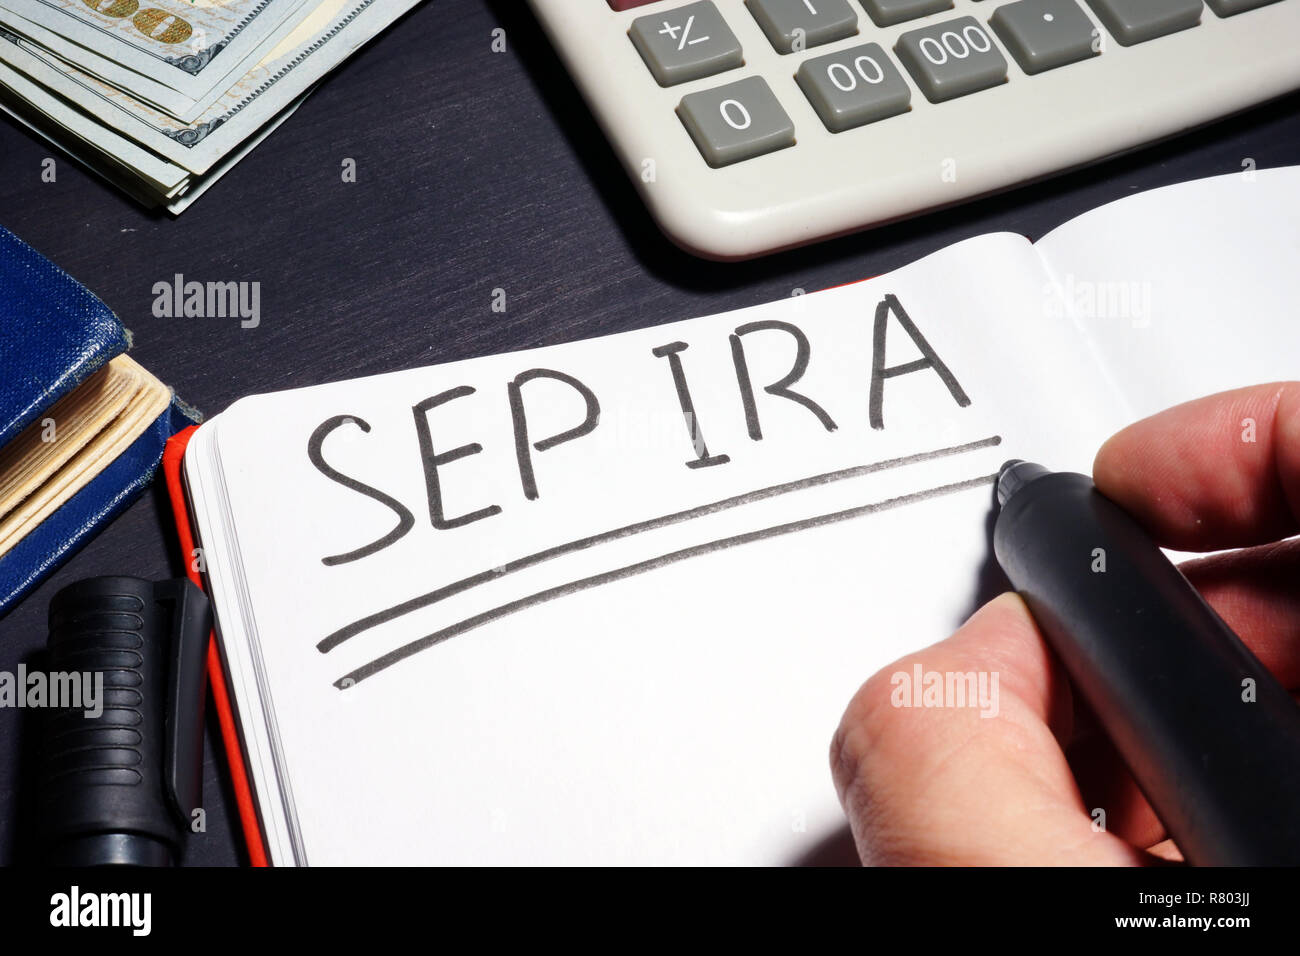 Sep ira handwritten on a page. Retirement plan. Stock Photo